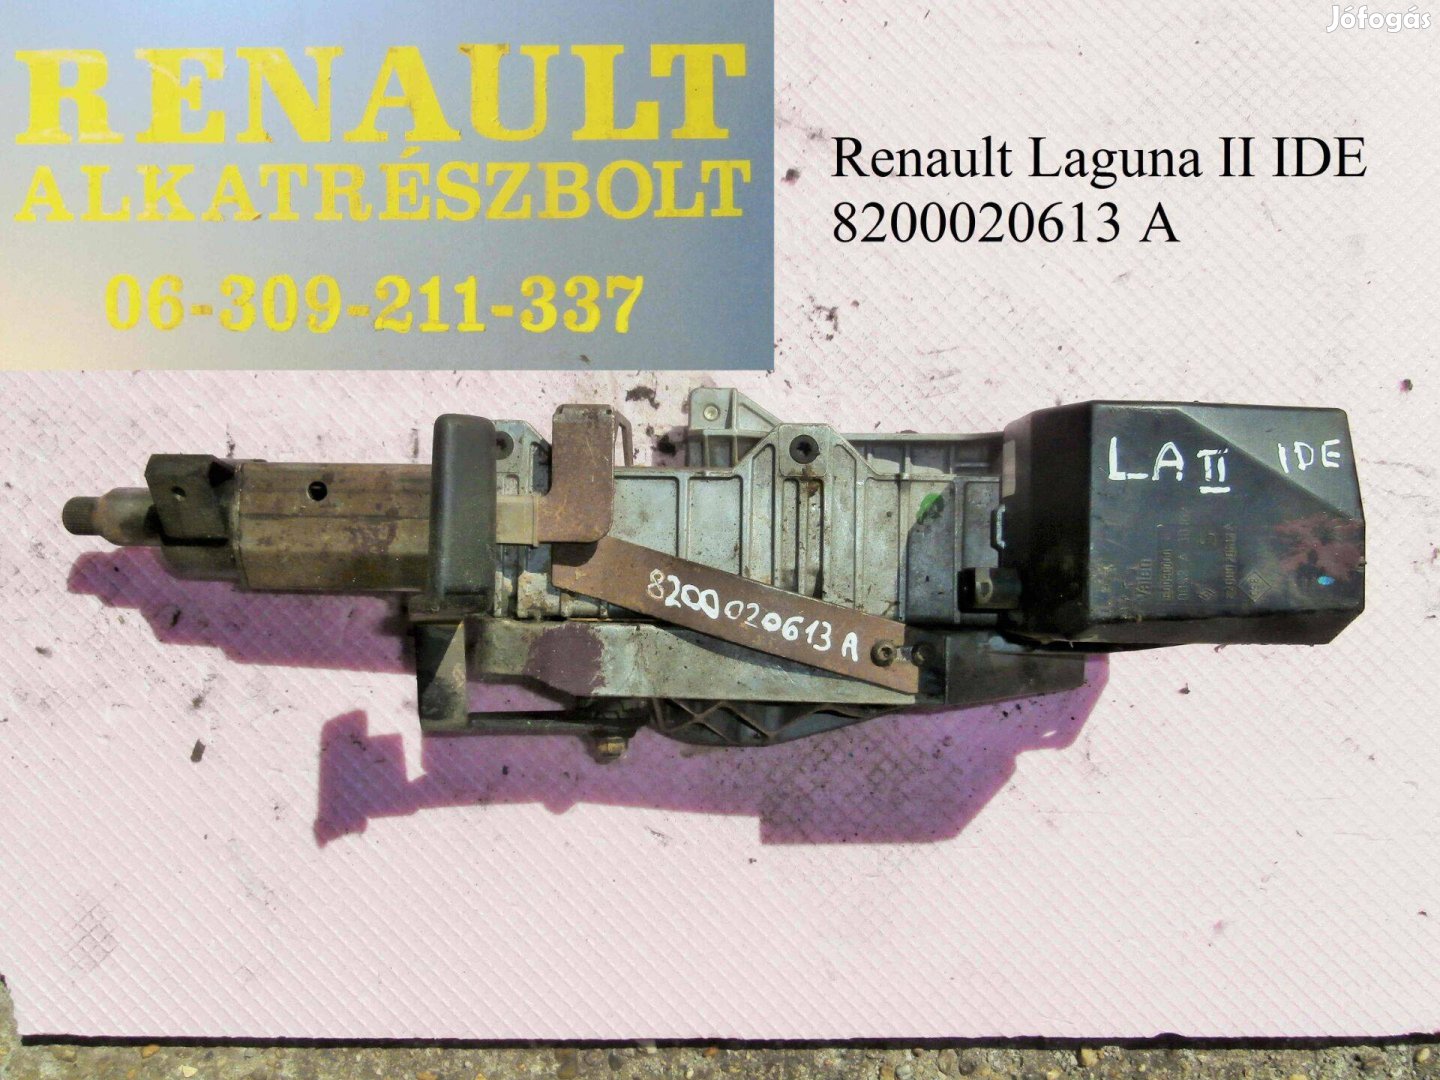 Renault Laguna II IDE 8200020613 A kormányoszlop